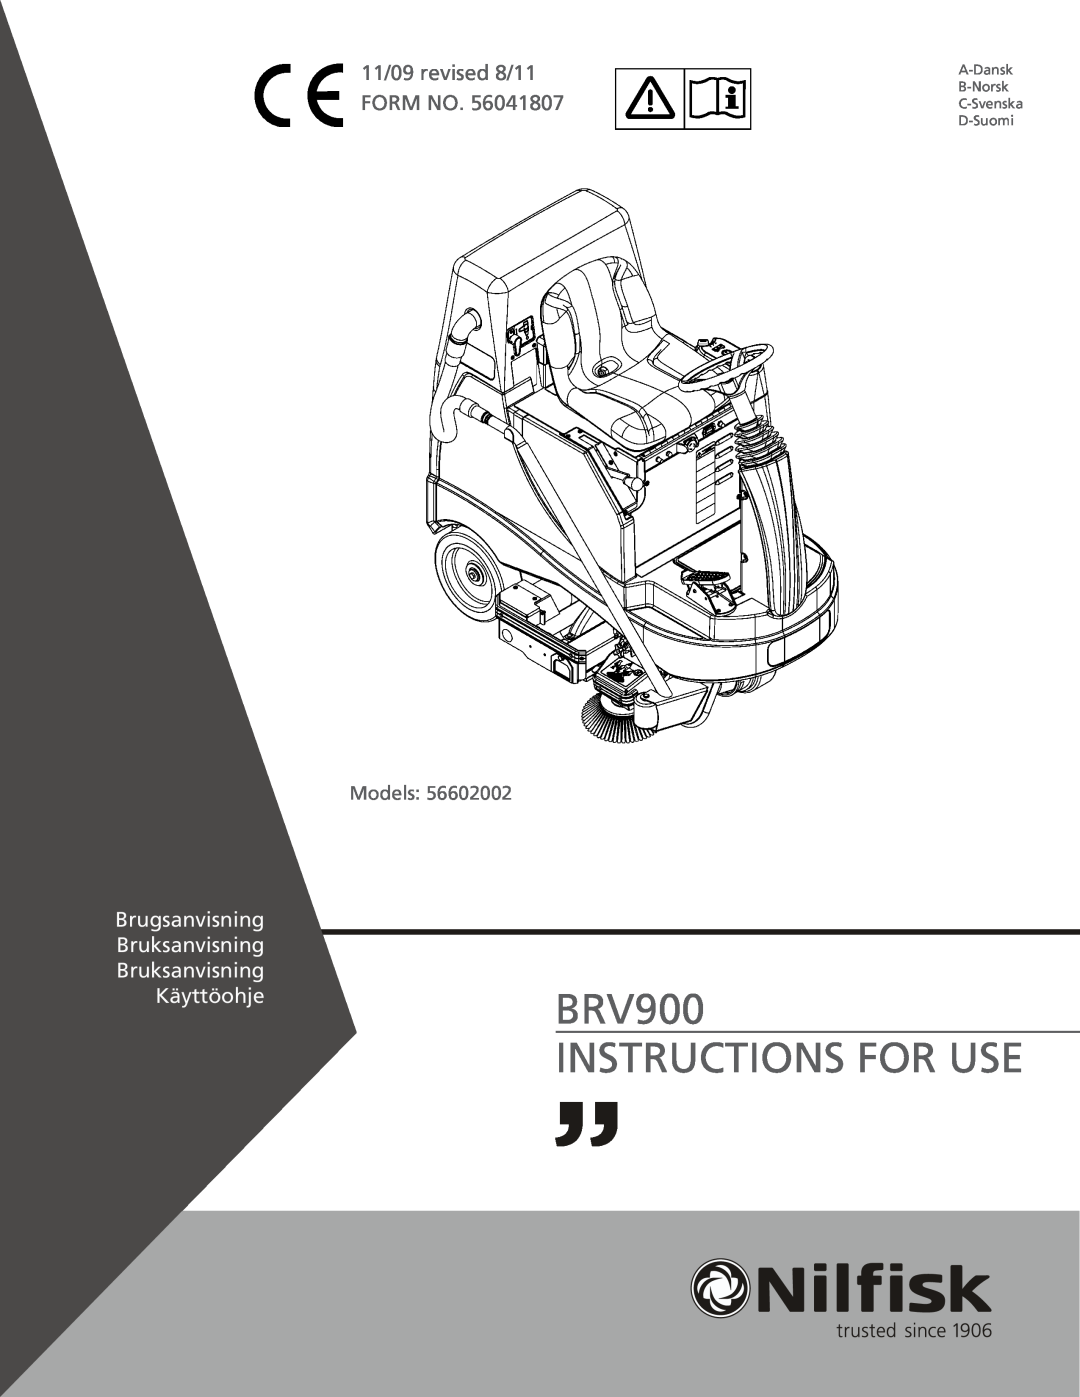 Nilfisk-Advance America 56602002 manual BRV900 INSTRUCTIONS FOR USE, 11/09 revised 8/11 FORM NO, Models 